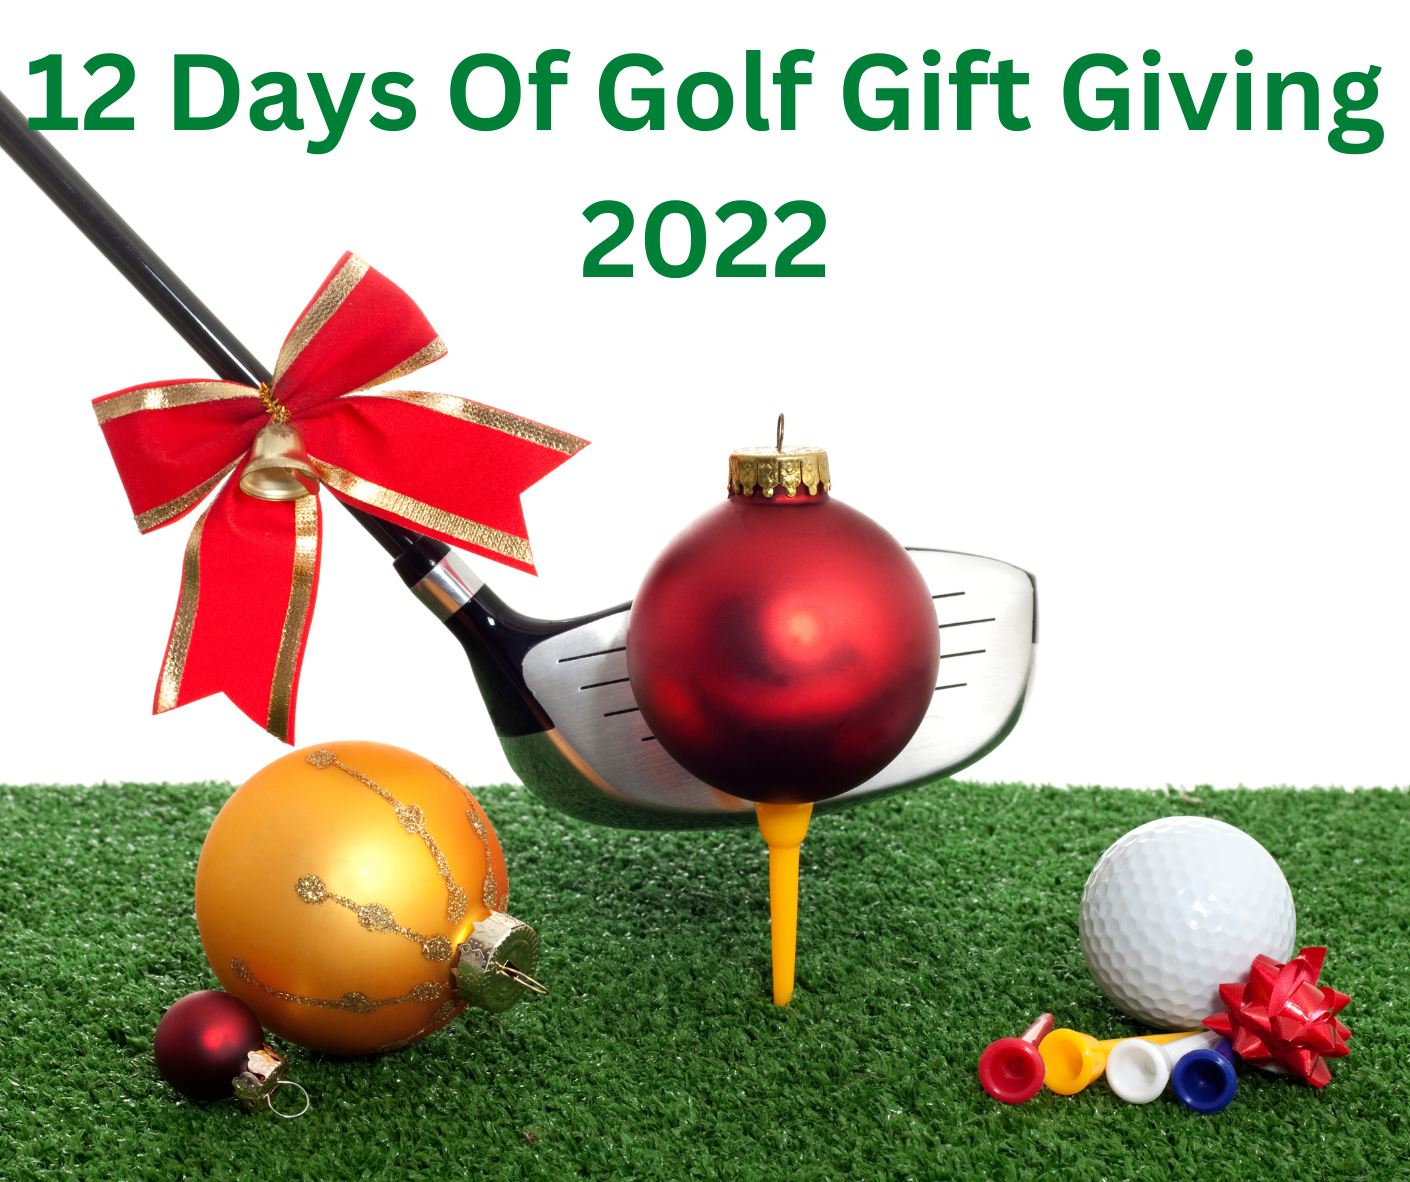 12-Days of Golf Gift Giving, John Hughes Golf, Operation 36, Golf Skills Evaluation